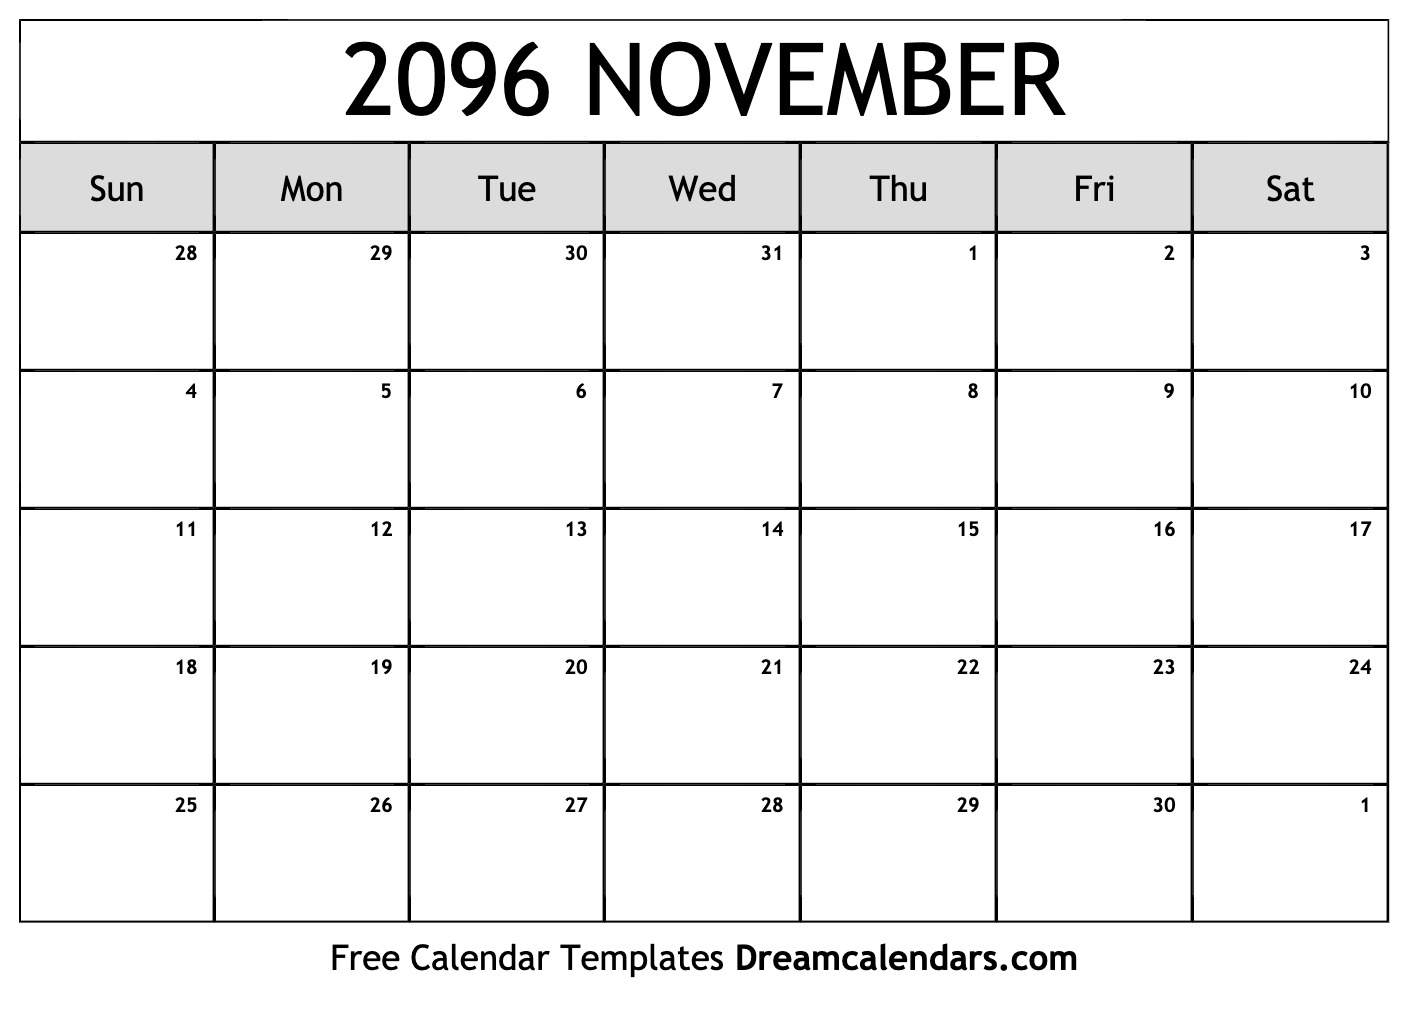 november-2096-calendar-free-blank-printable-templates